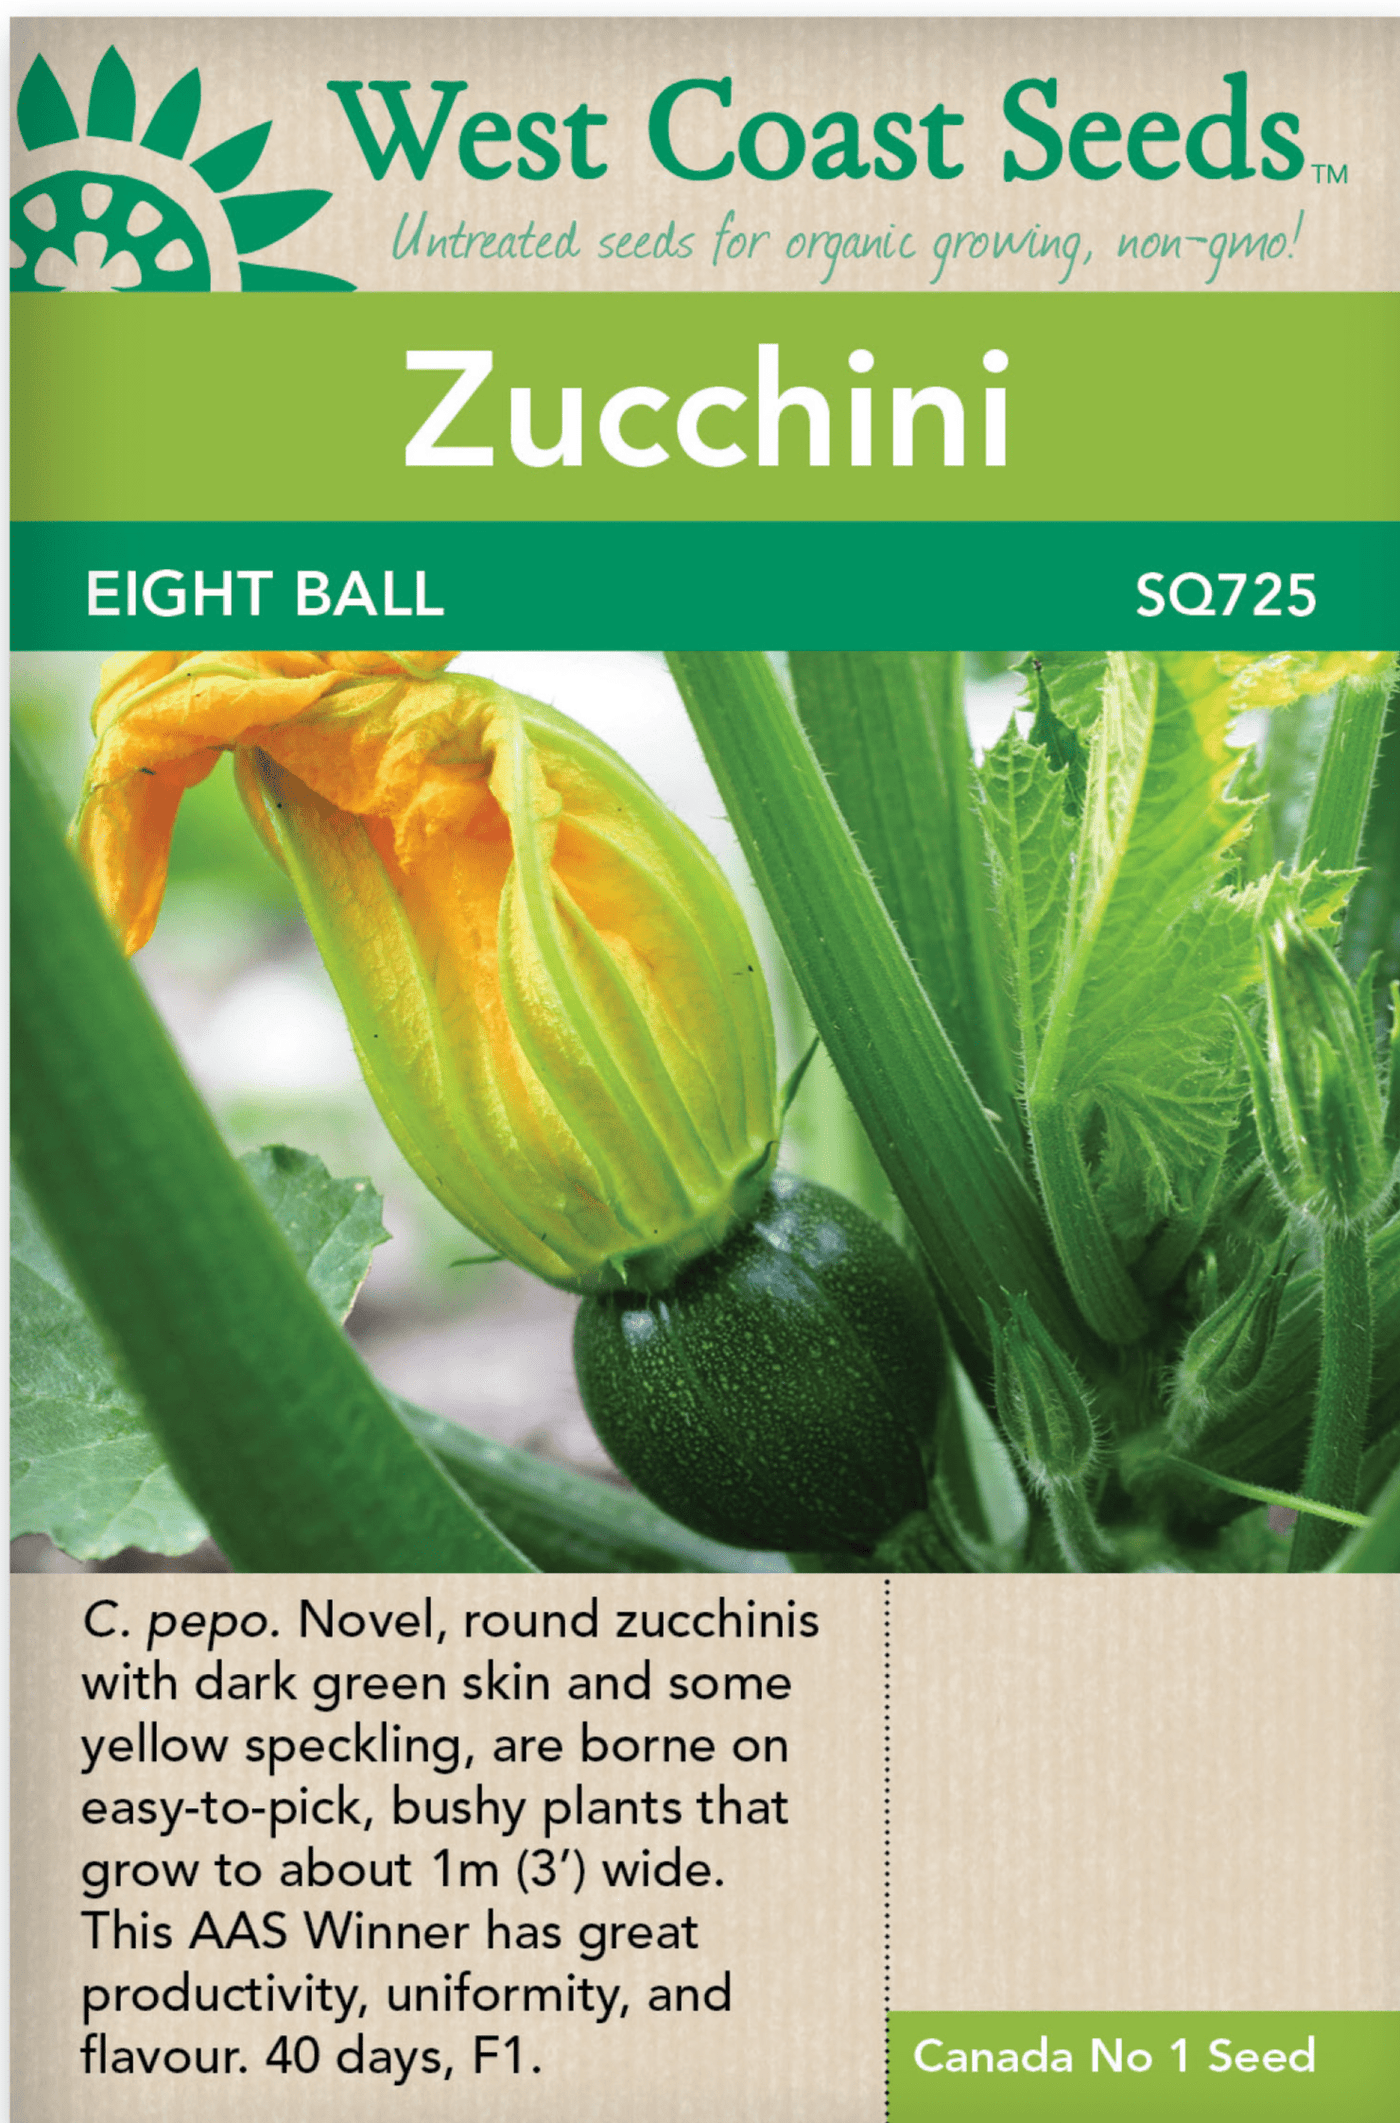 Zucchini Eight Ball - West Coast Seeds West Coast Seeds Ltd